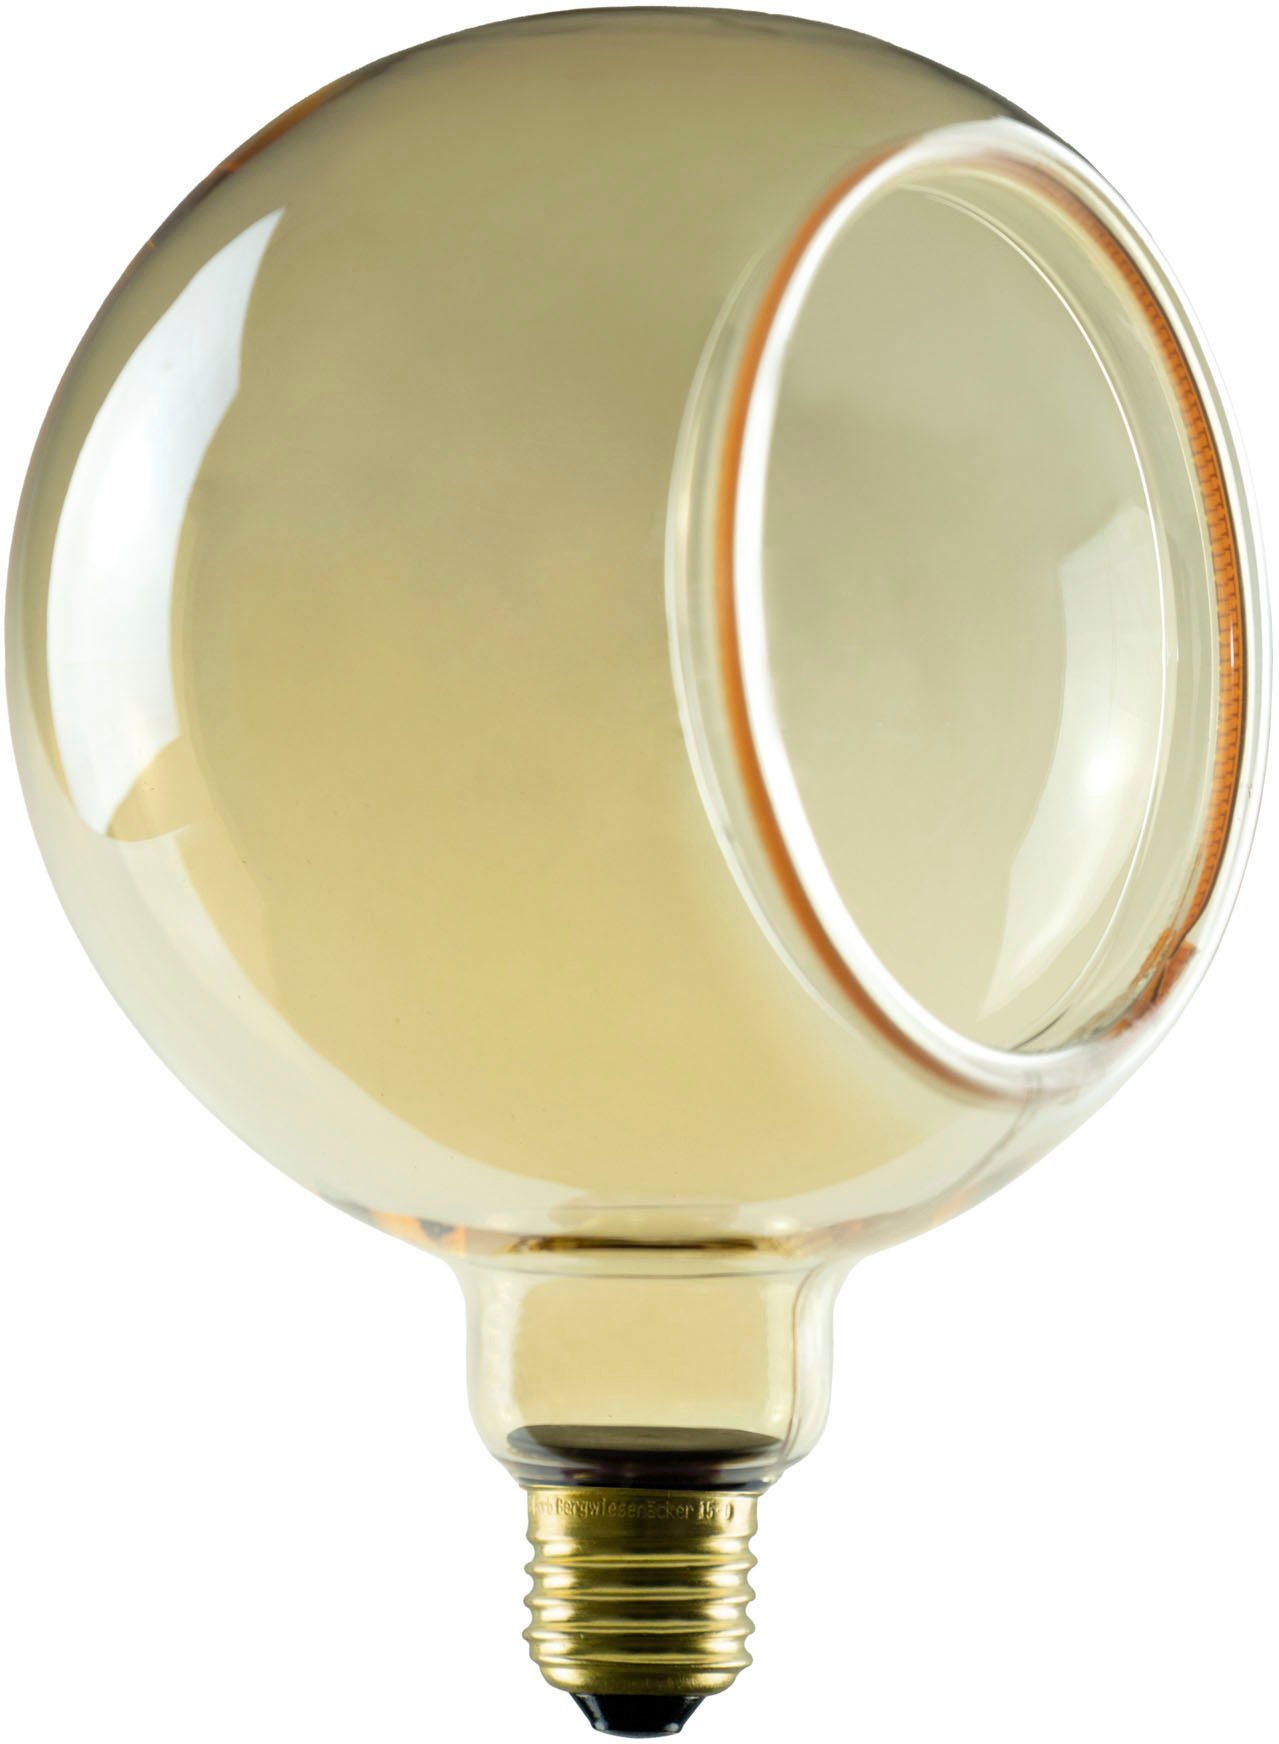 LED-Leuchtmittel Globe gold SEGULA 150 LED 90°, St., 90°, Floating E27, 4,5W, gold Floating Globe CRI 150 Extra-Warmweiß, 1 E27, dimmbar - 90, LED -